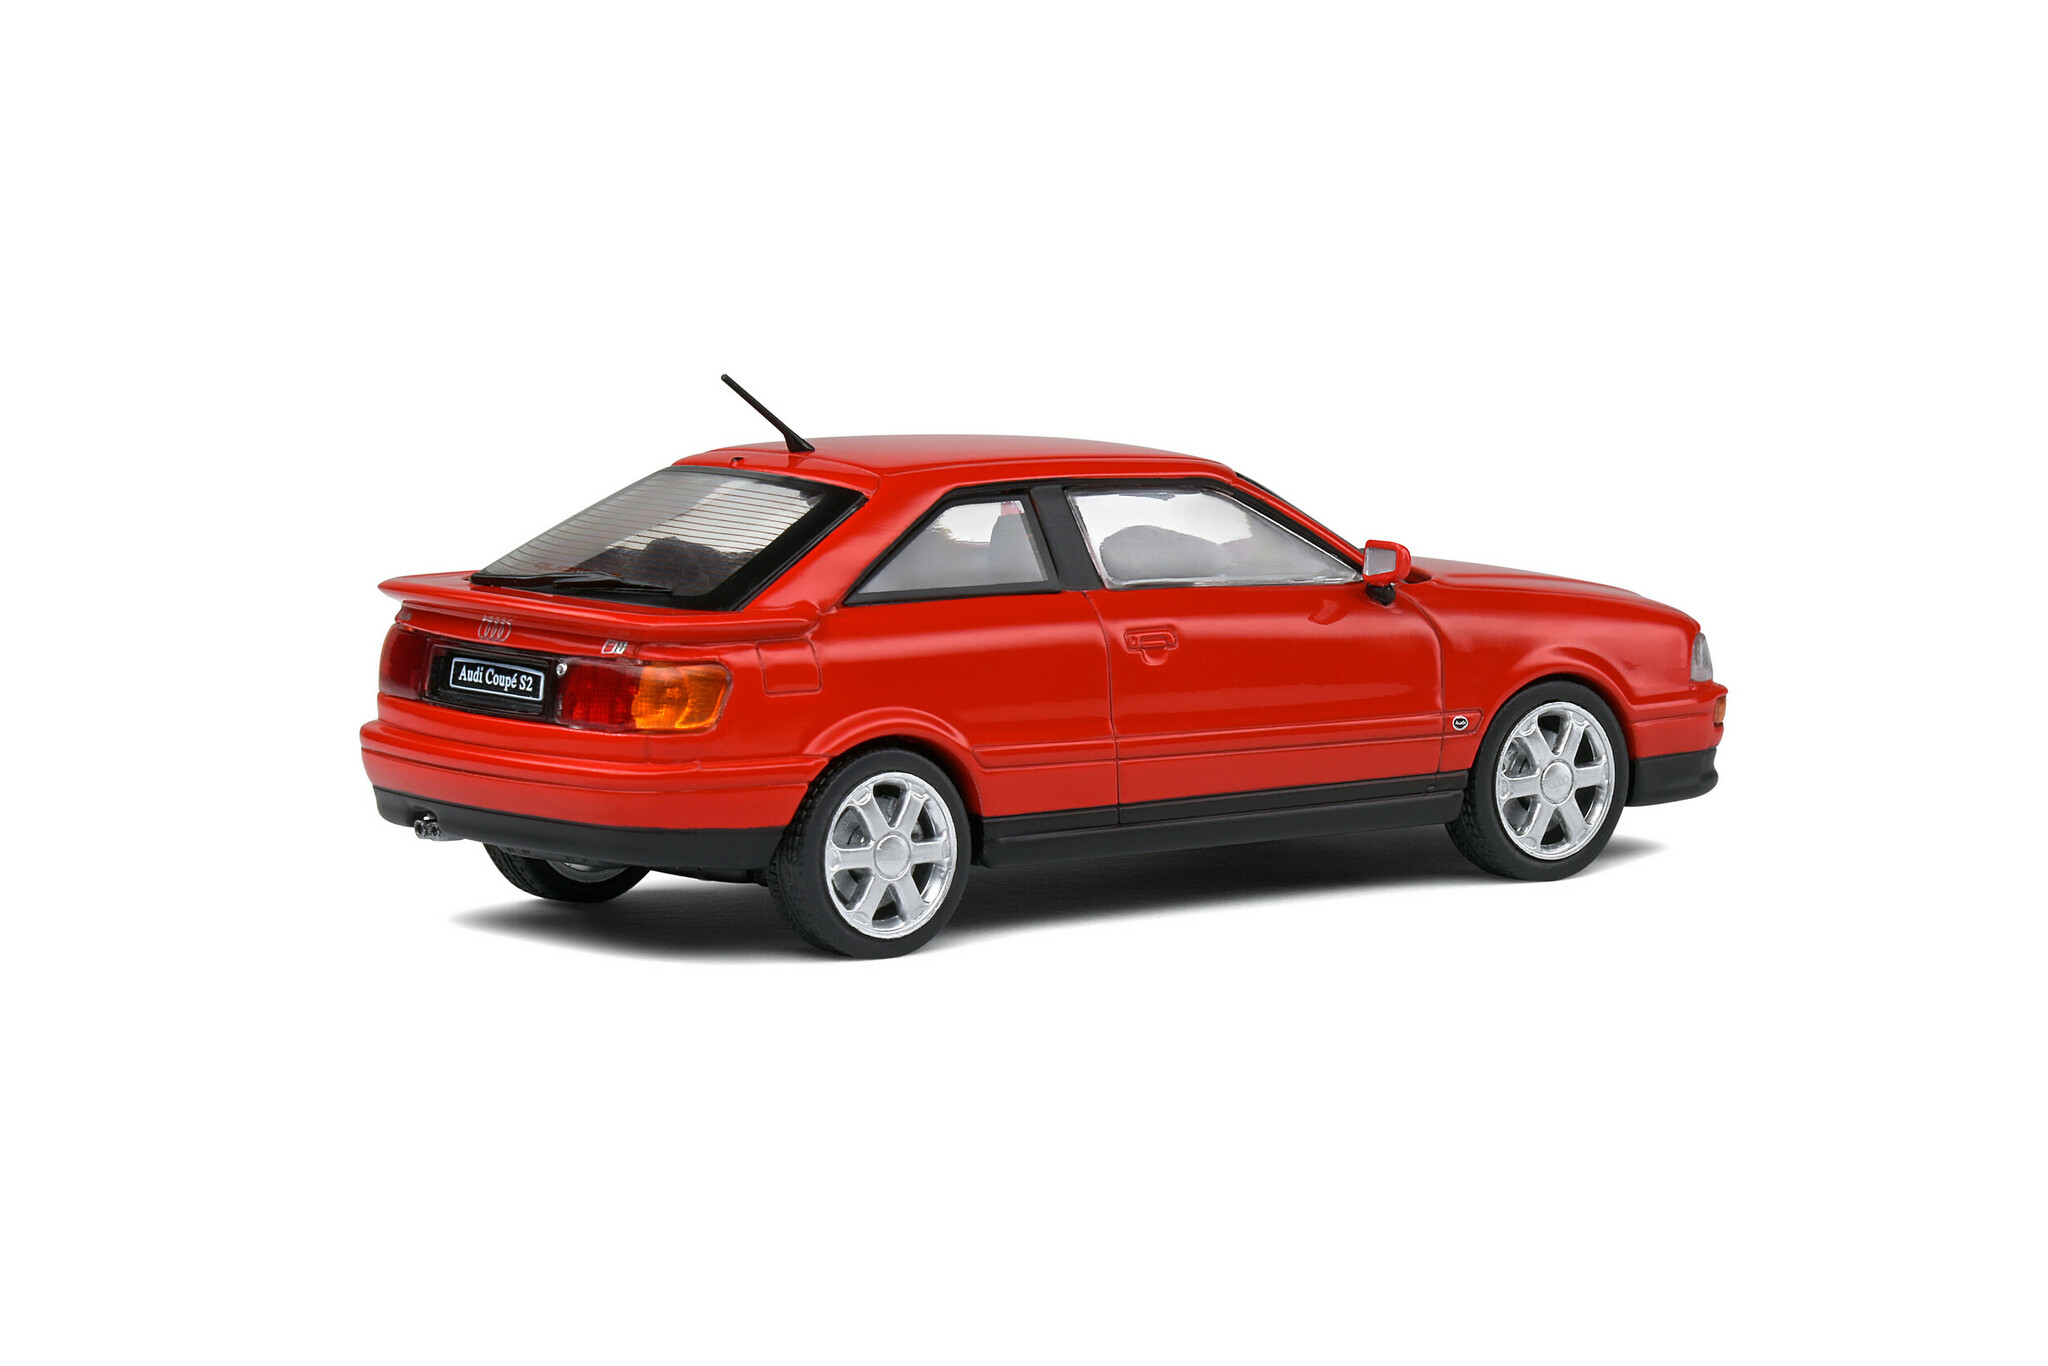 Skala 1/43 Audi Coupé S2, 2226ccm (2,3) 5-cyl Turbo, Lazer red 92' fr Solido